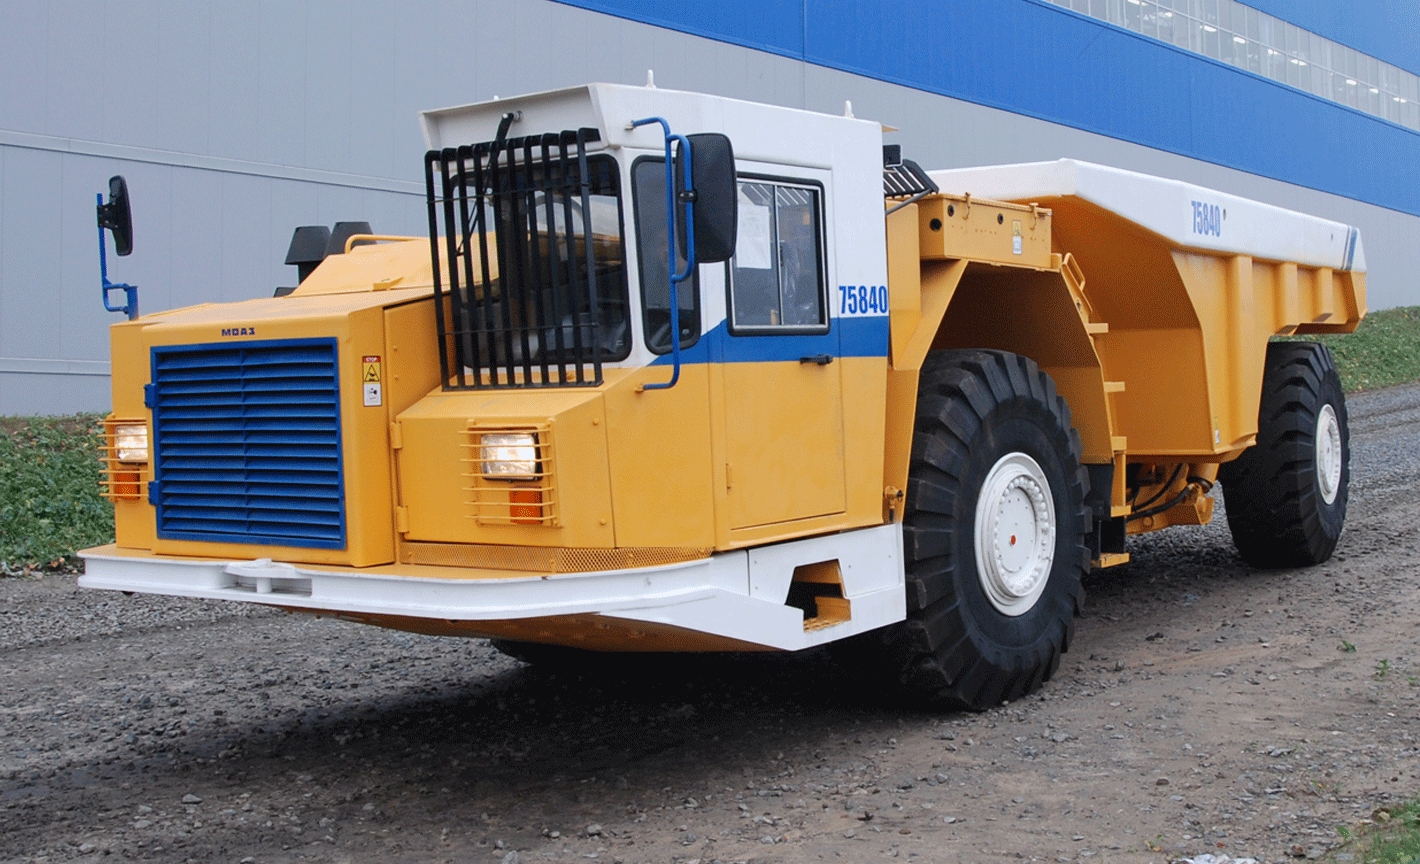 MOAZ-75840 underground mining dump trucks